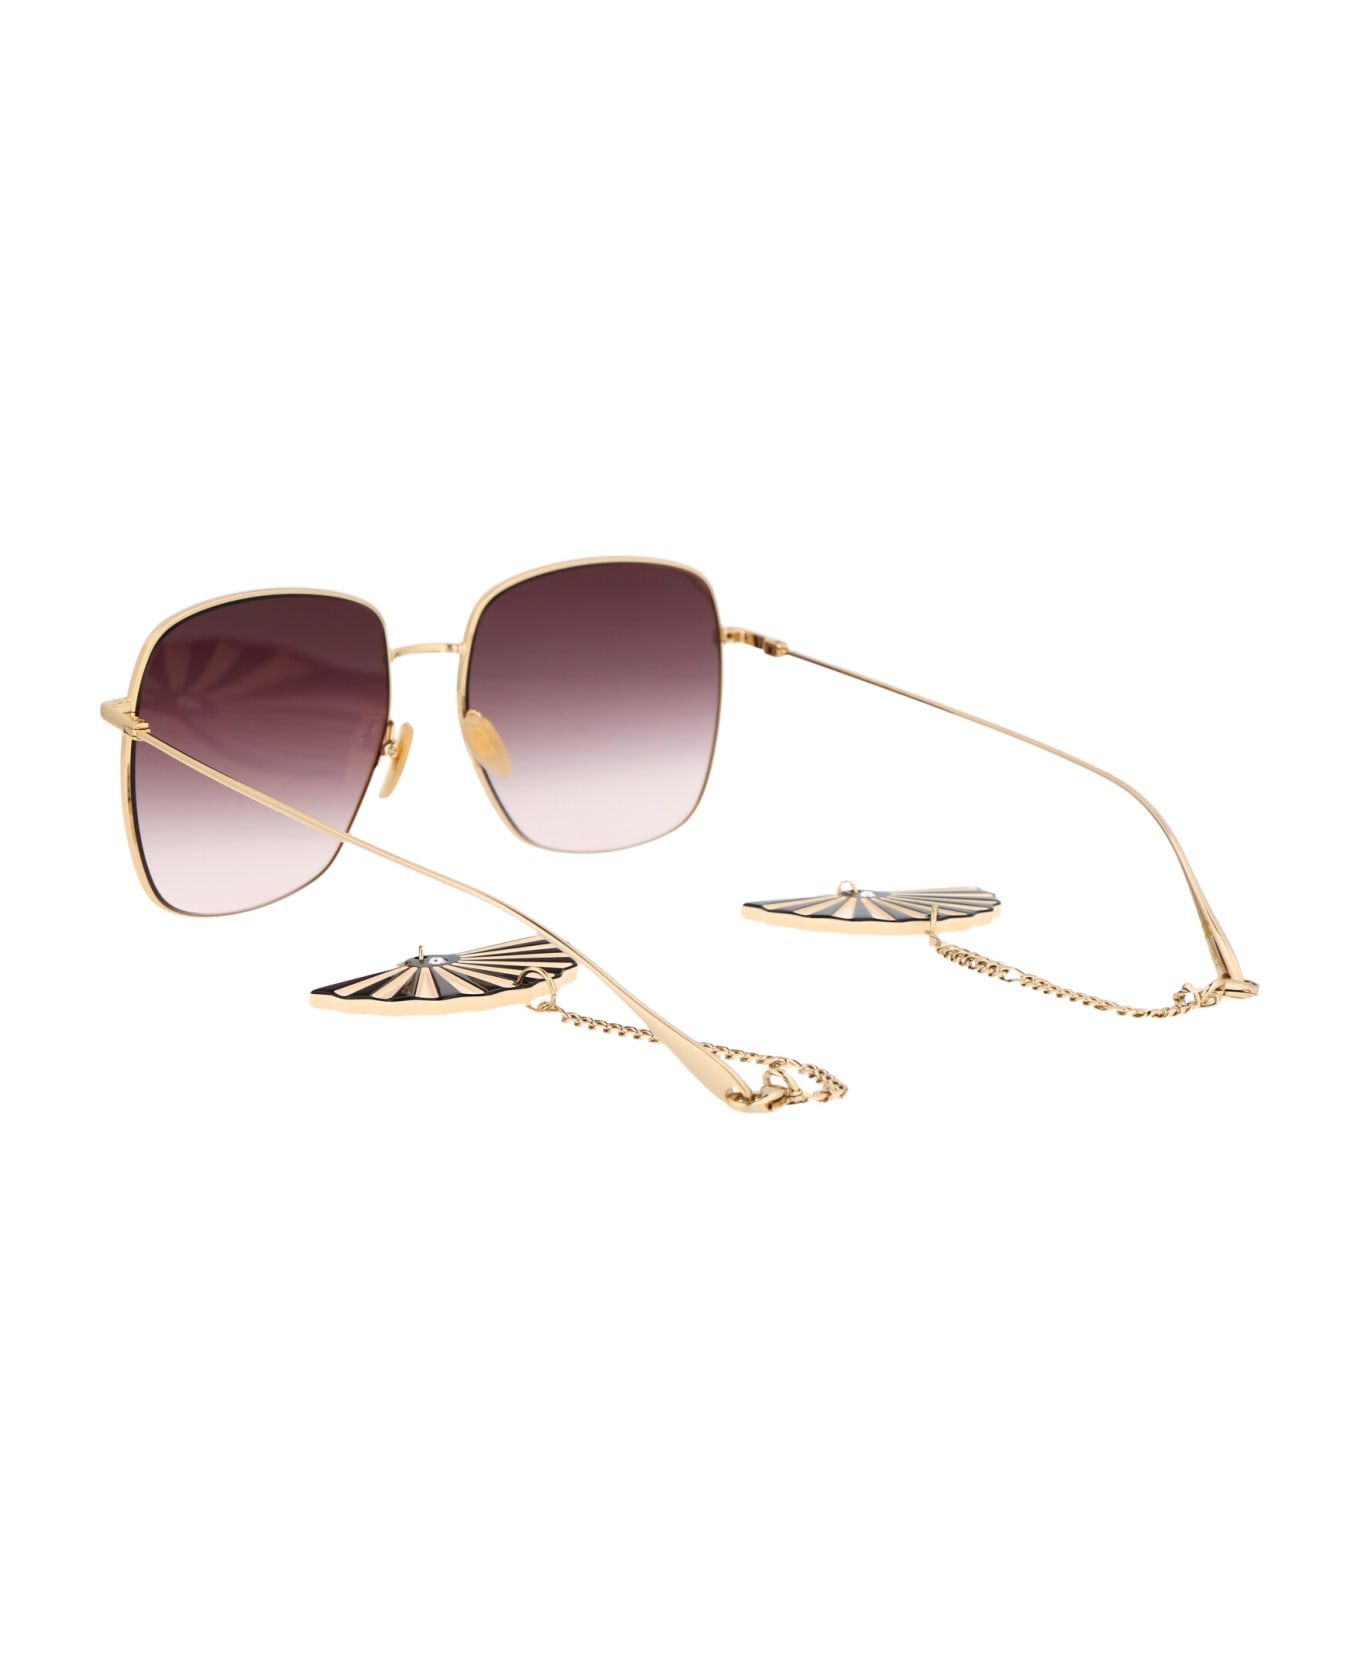 Gucci Eyewear Gg1031s Sunglasses - 010 GOLD GOLD RED サングラス